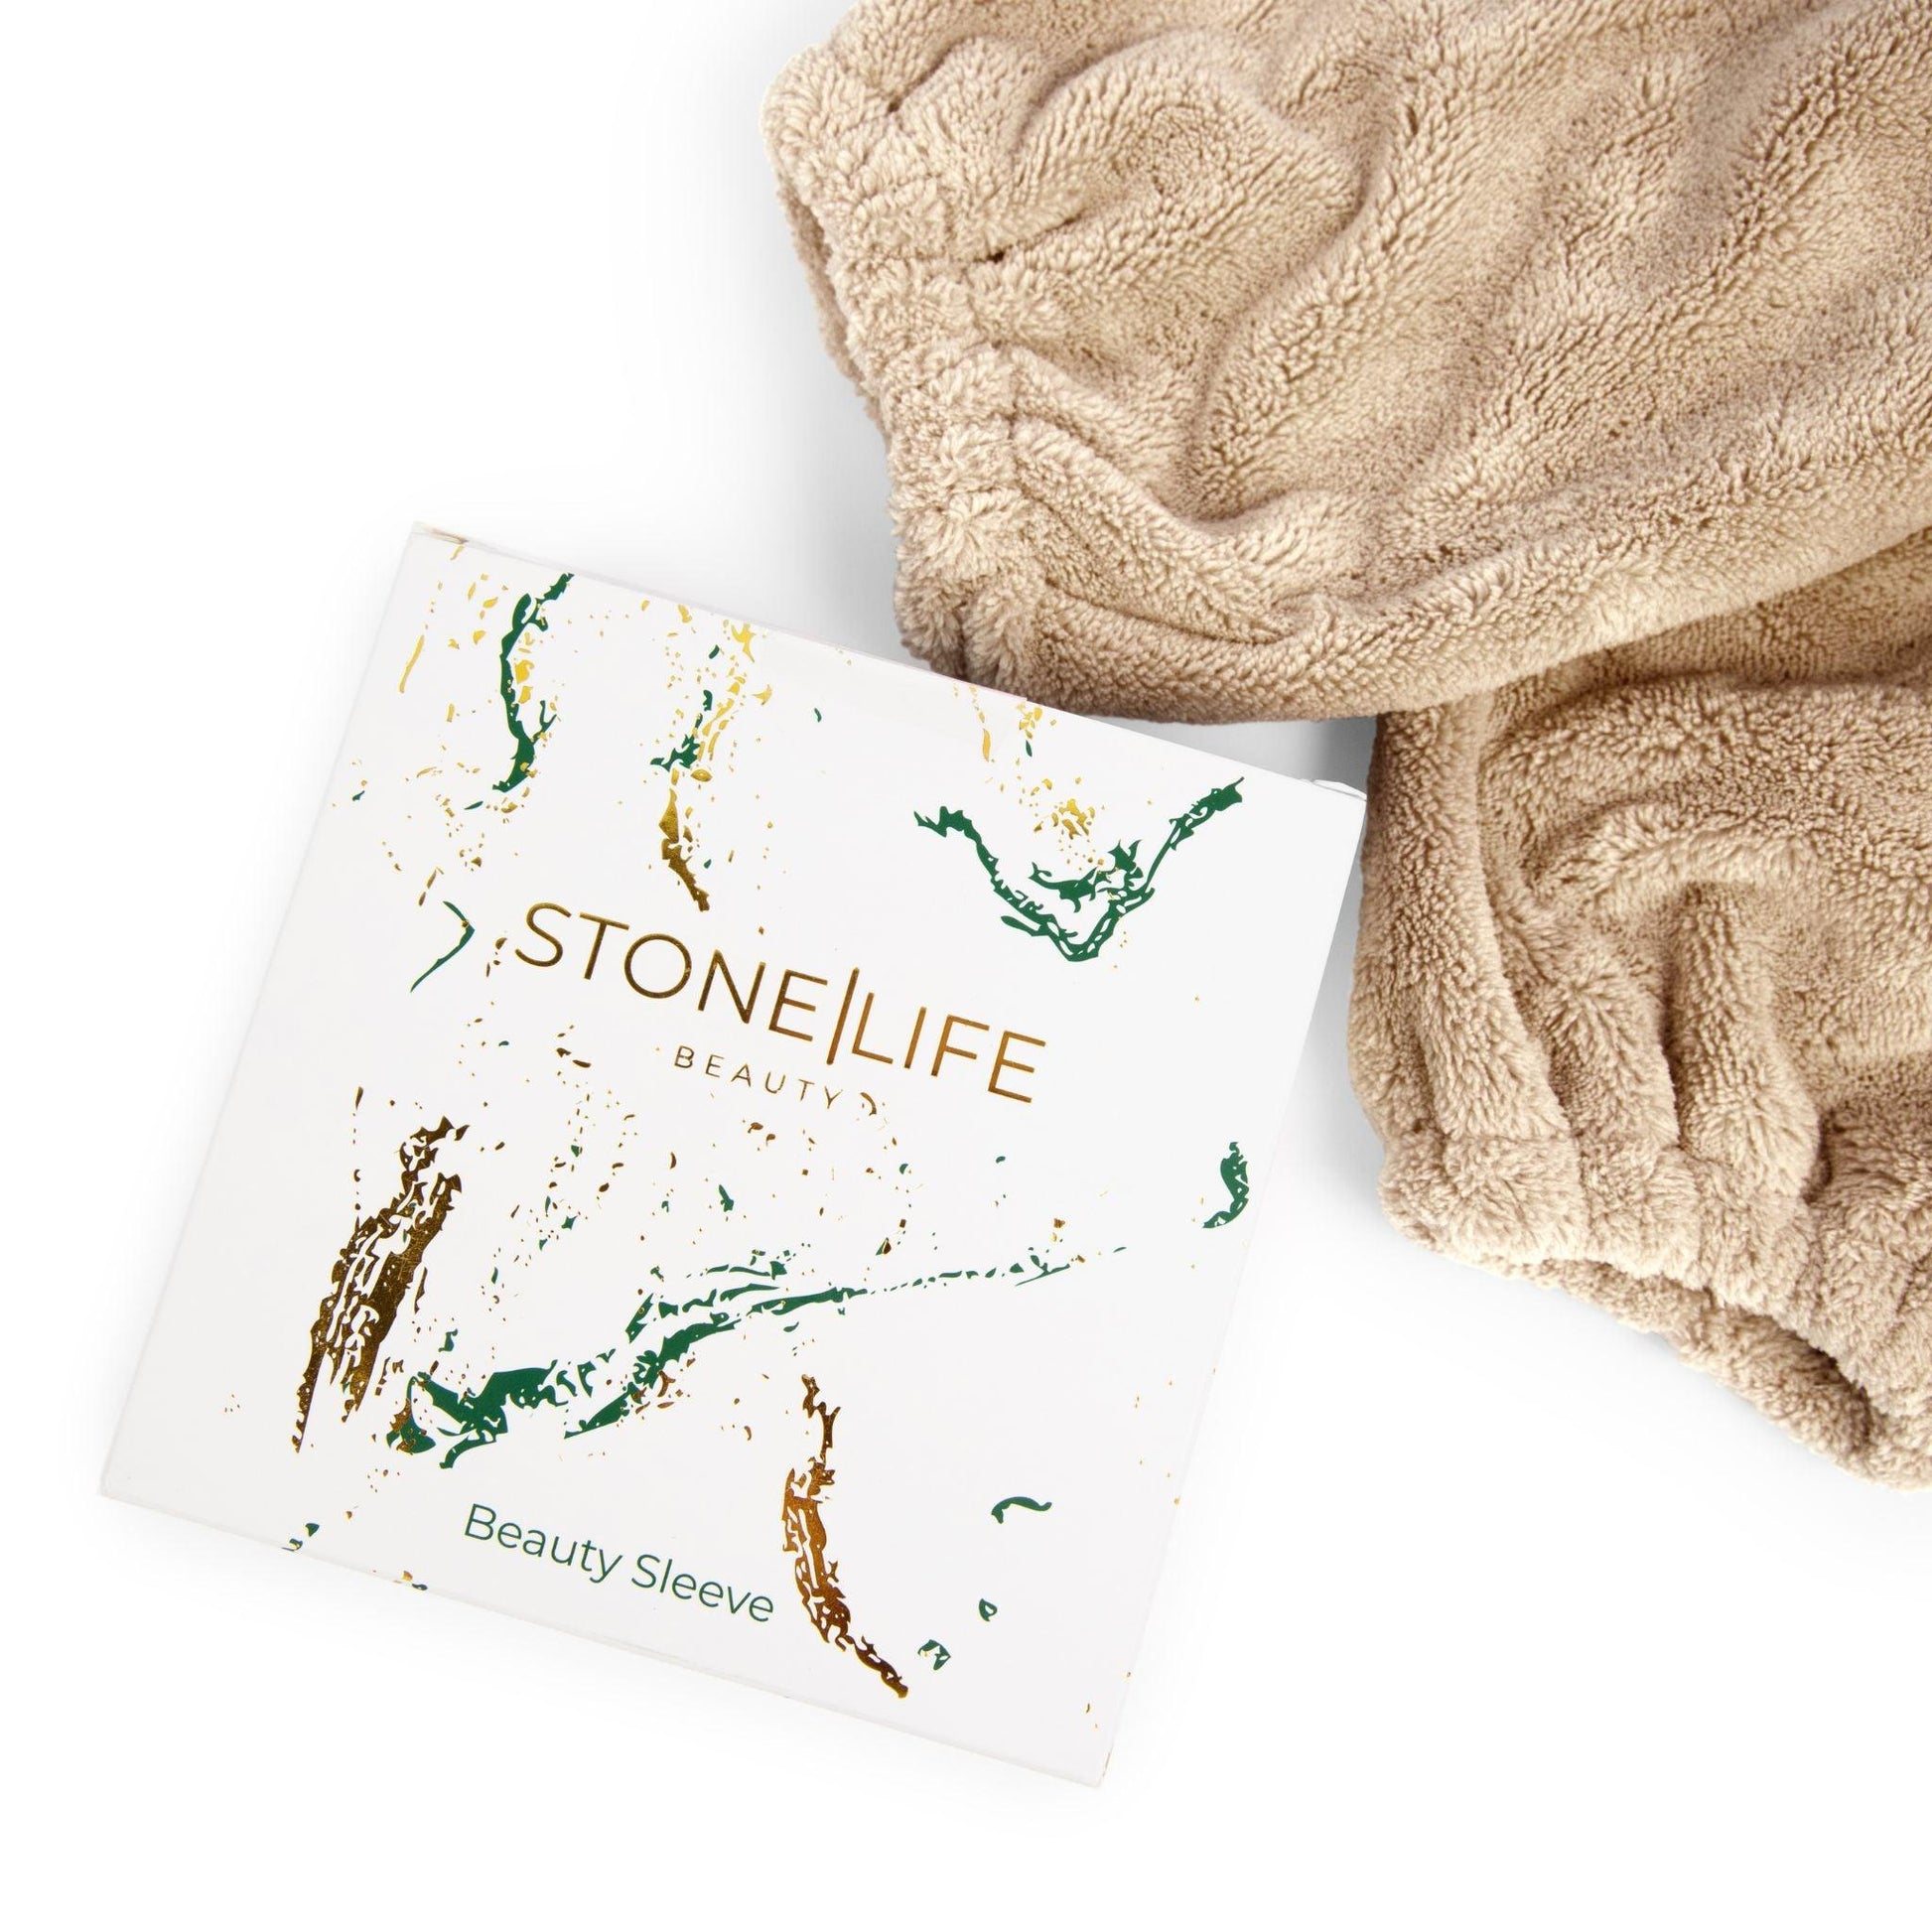 Original Bombshell Beauty Sleeve - Champagne - Stone|Life Beauty